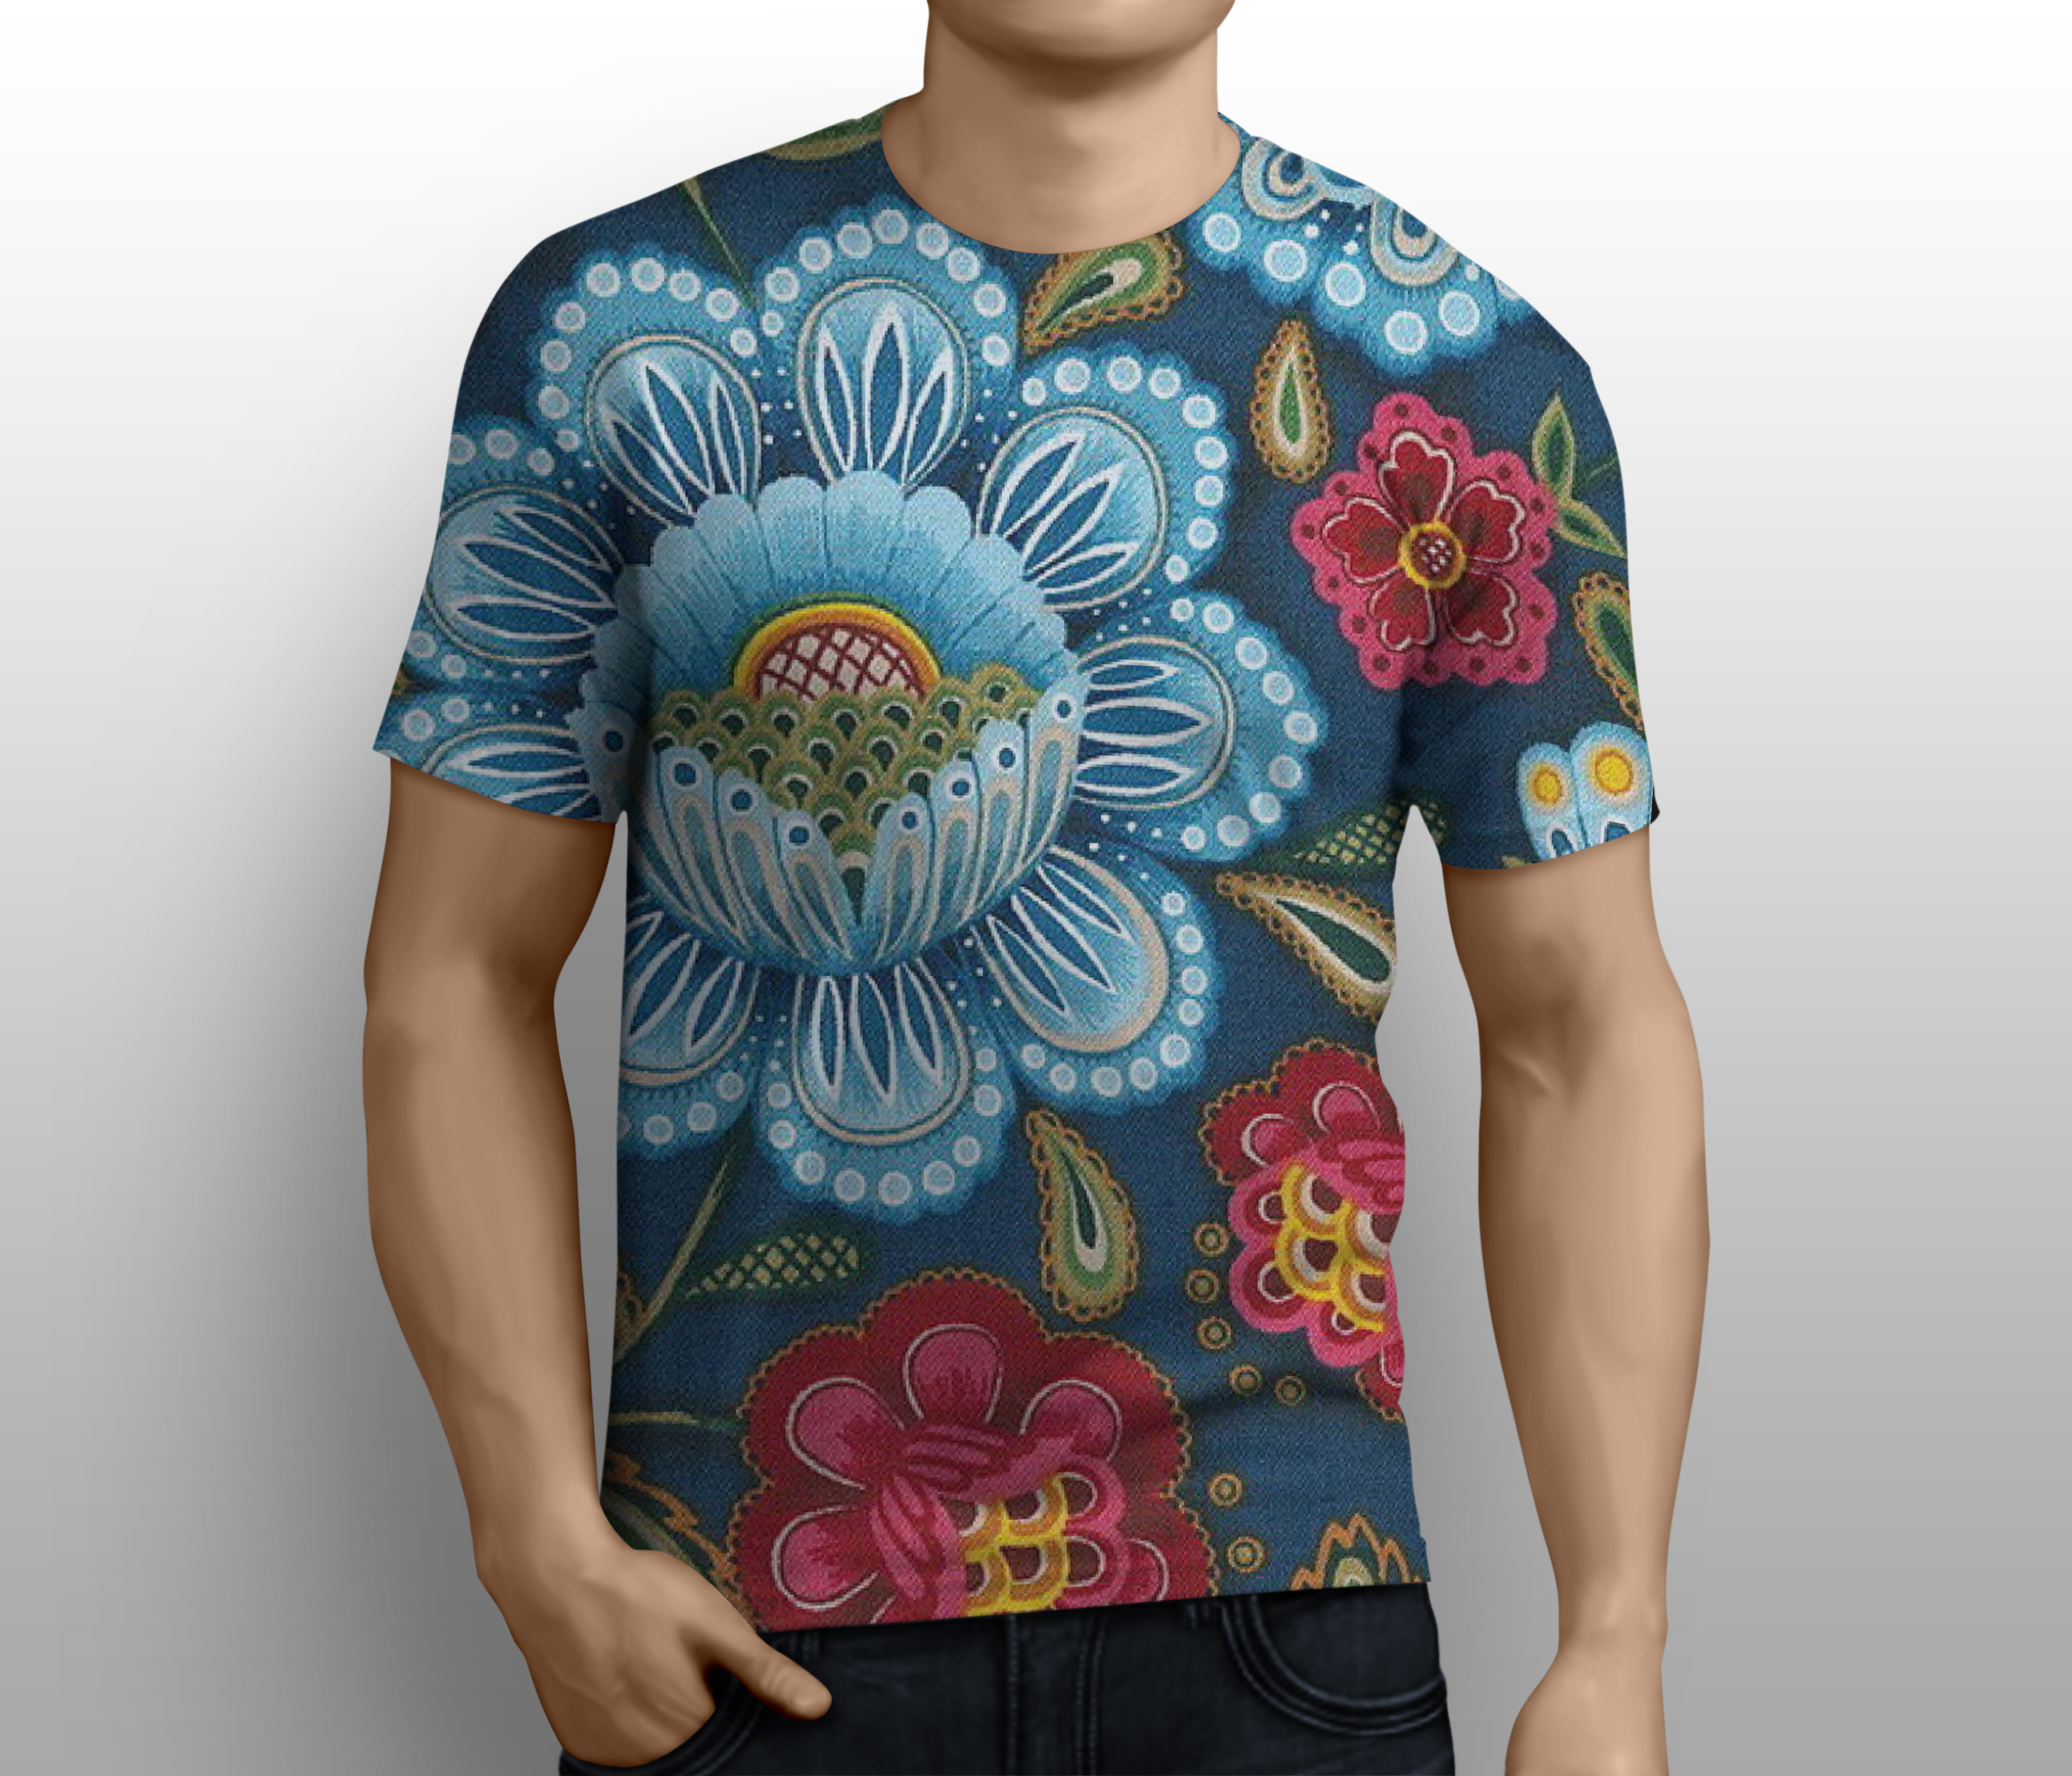 Men's Floral Decorated t-shirt